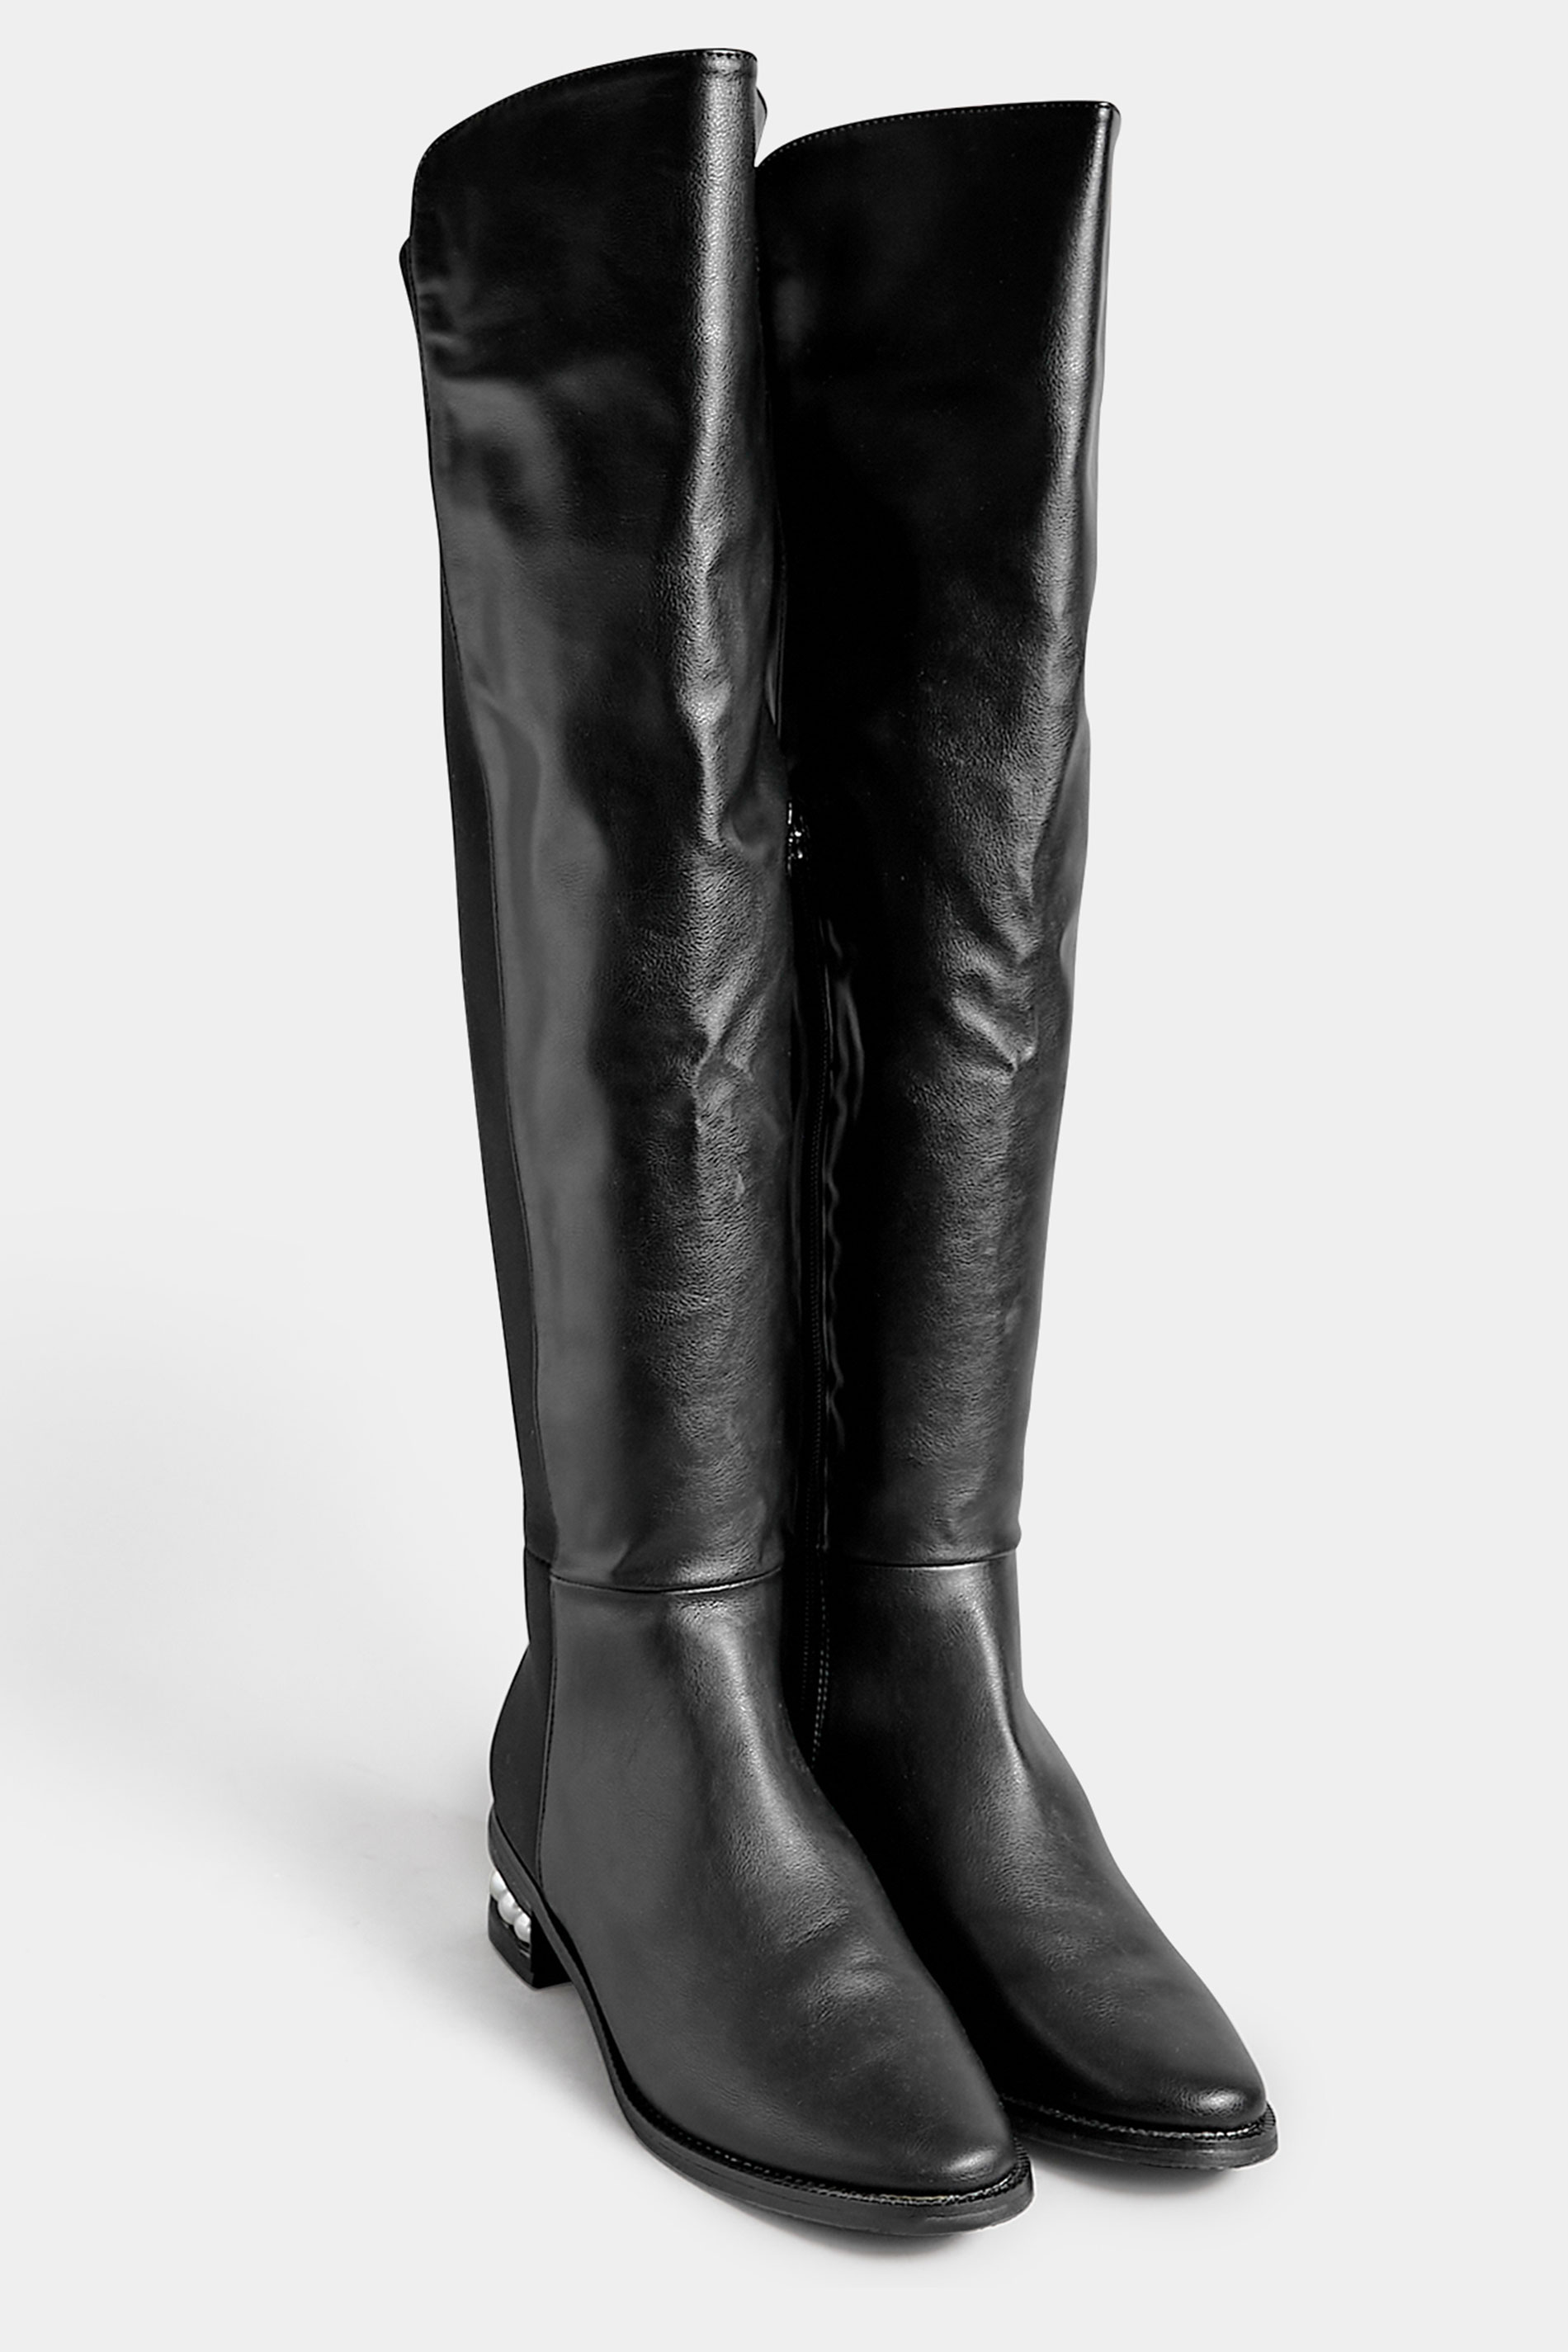 PixieGirl Black Over The Knee Pearl Boots In Standard Fit | PixieGirl 2